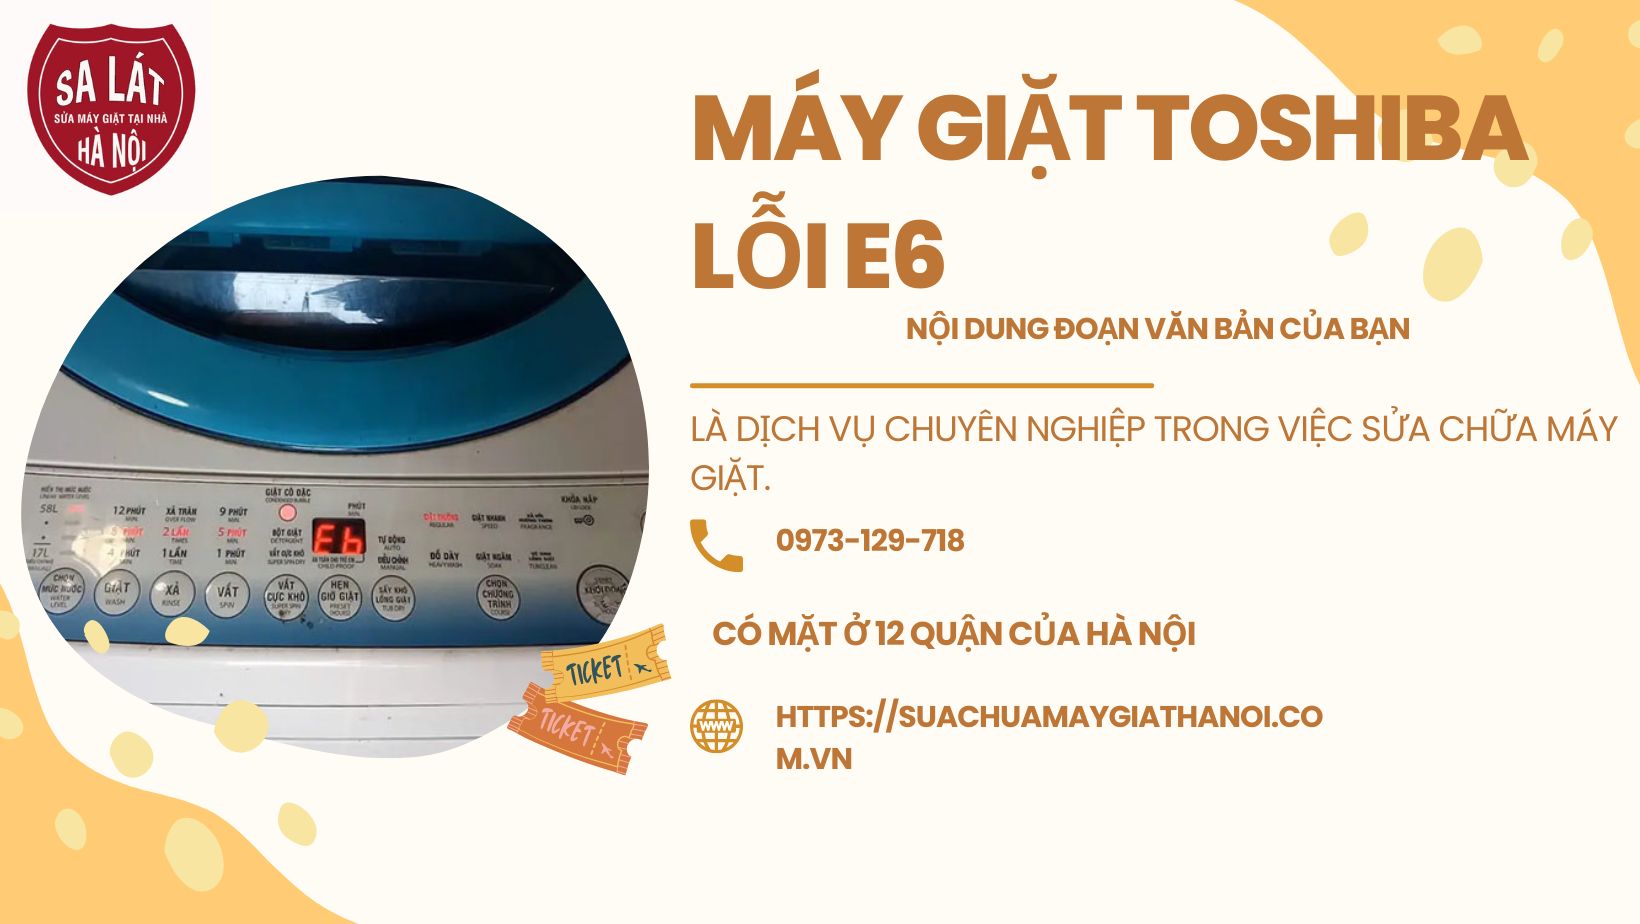 May Giat Toshiba Bao Loi E6 05